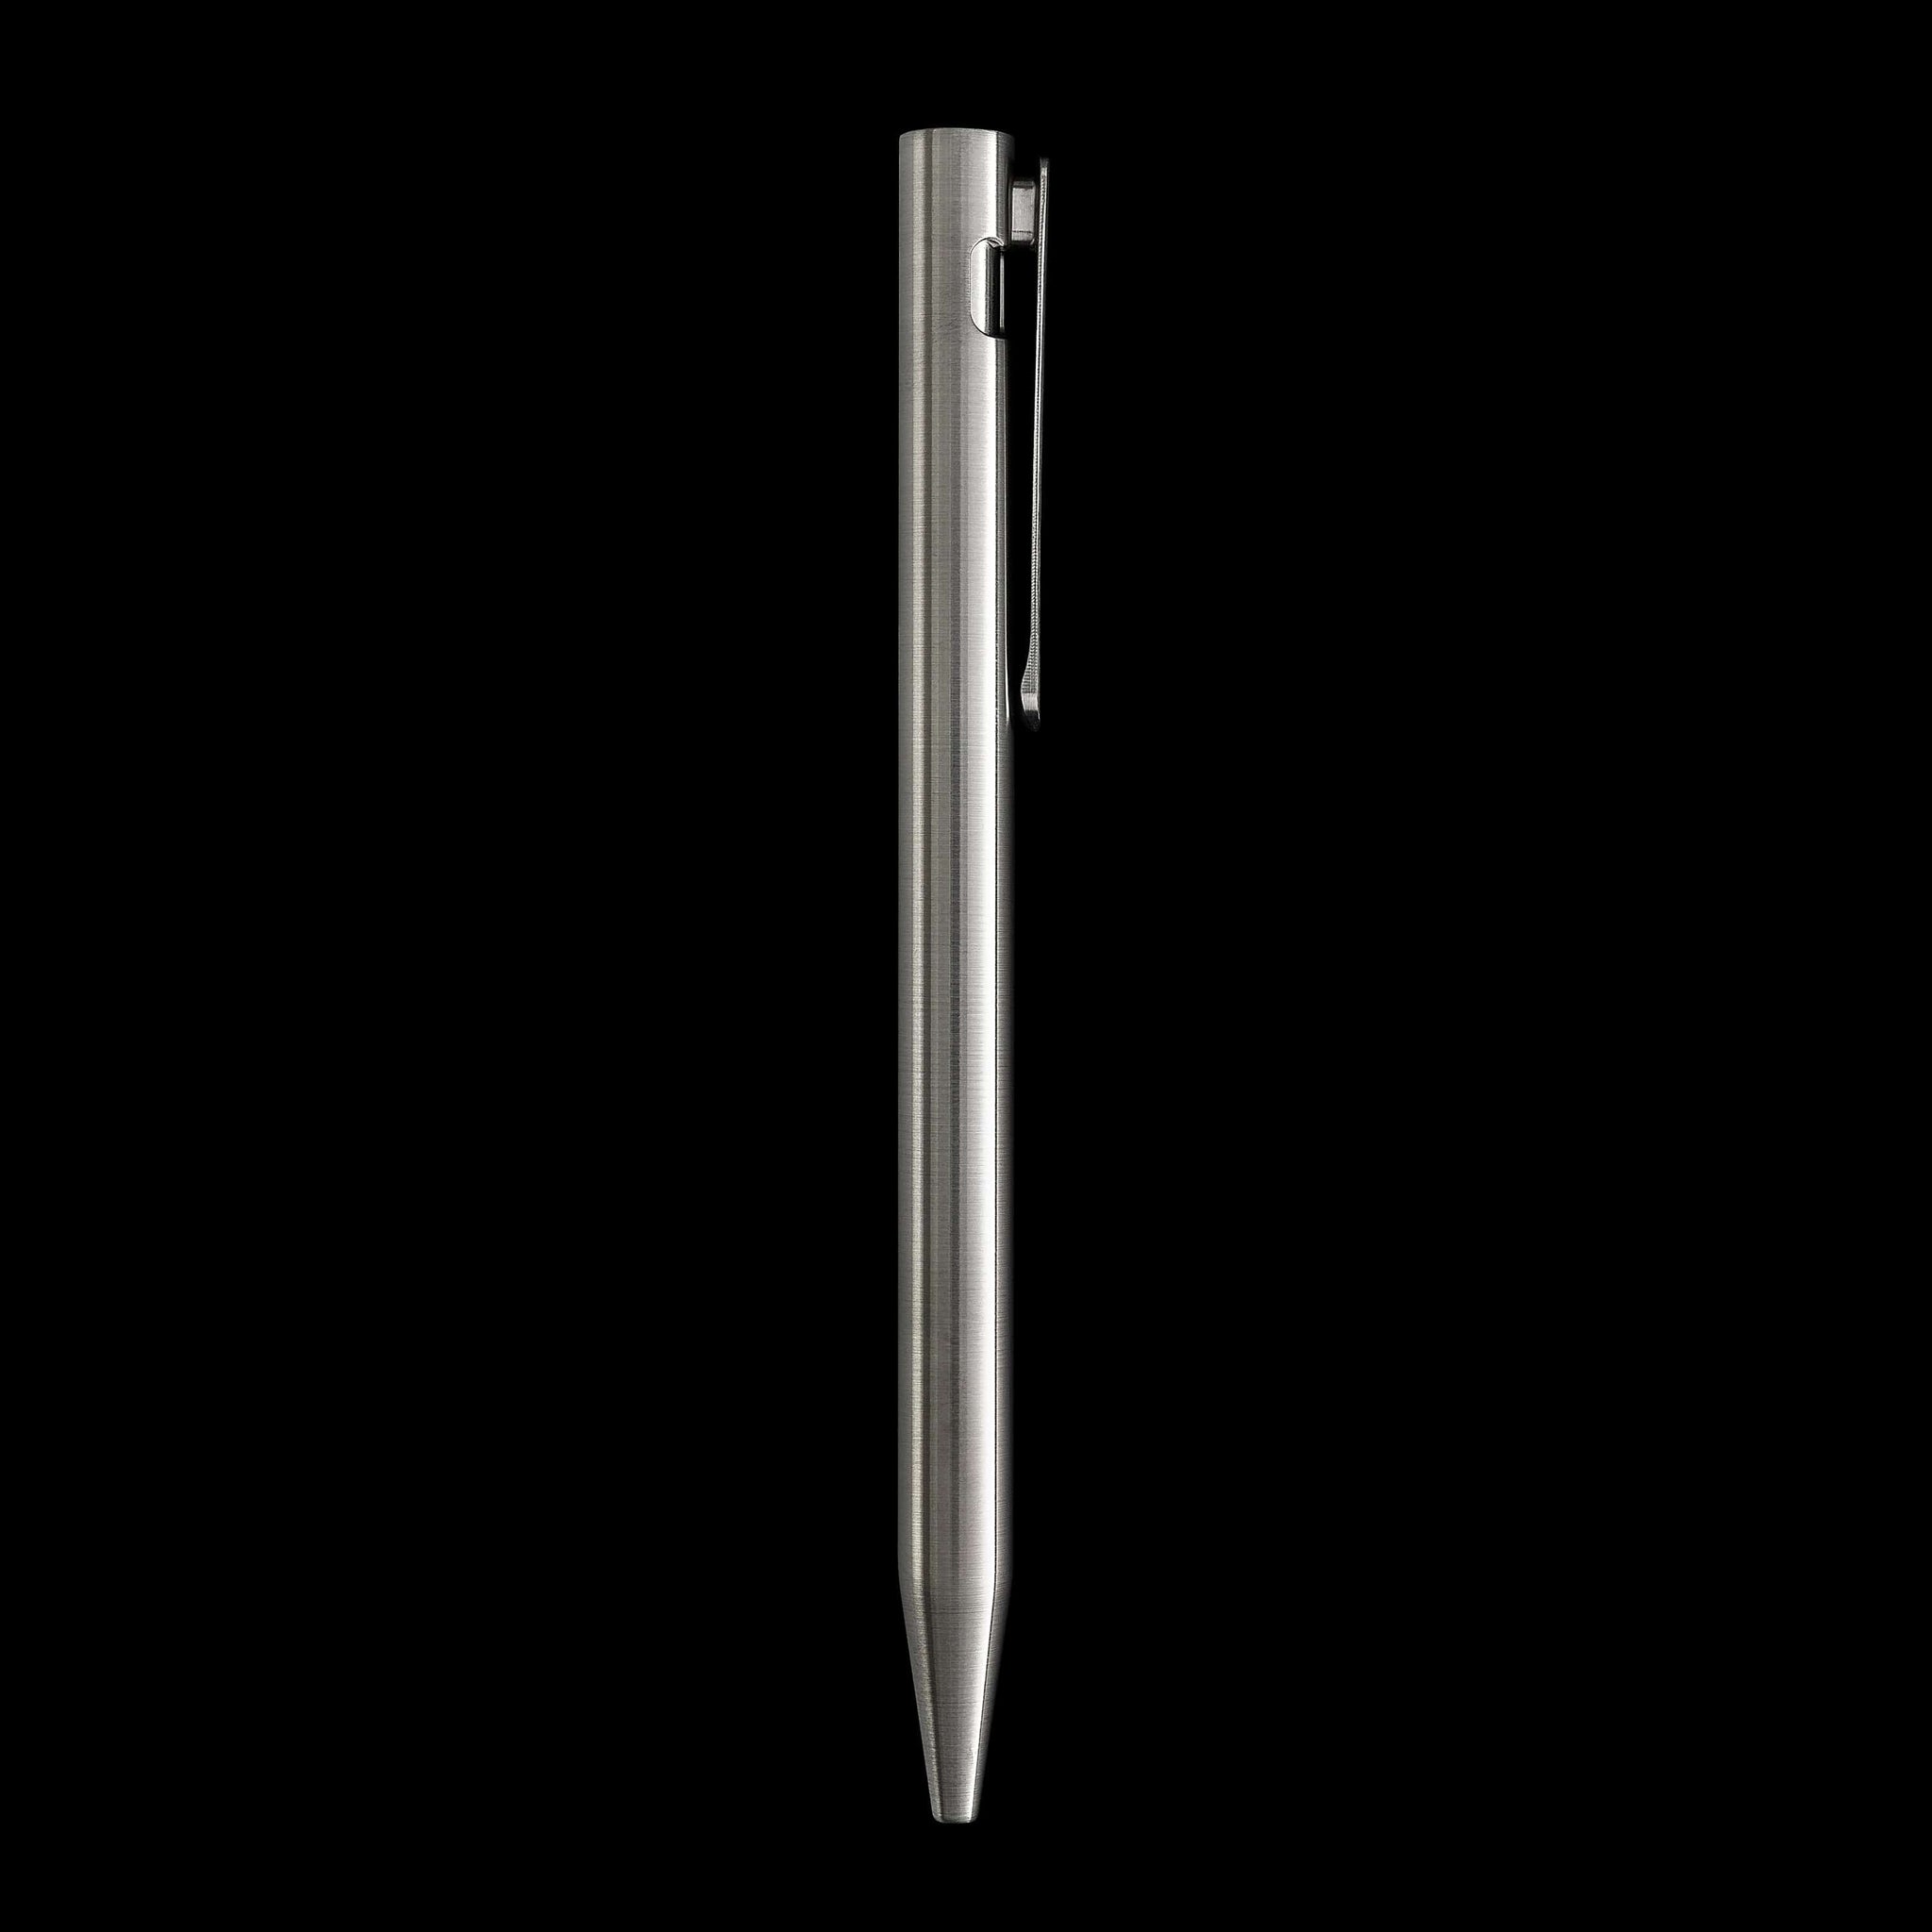 Modern Fuel - Bolt Action Pen Clip Kit